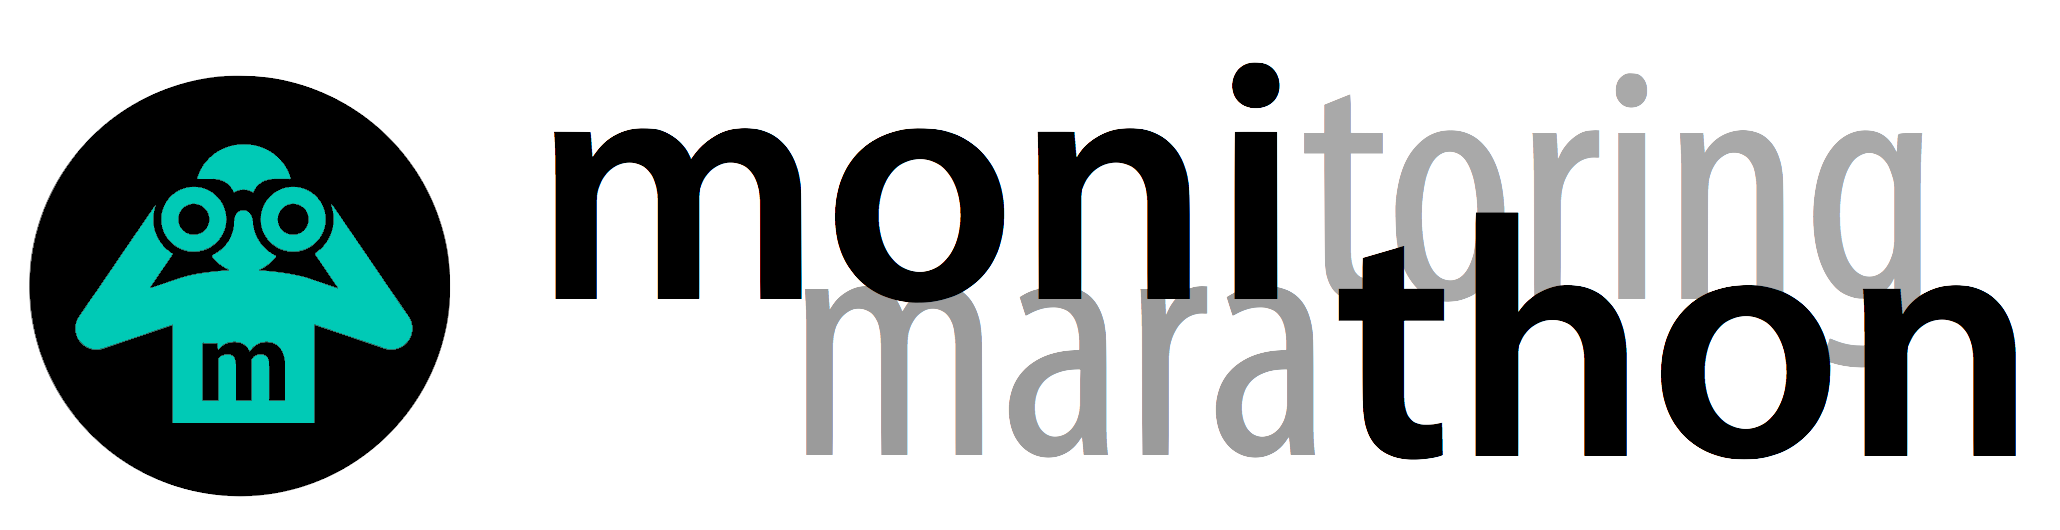 member-organization-logo